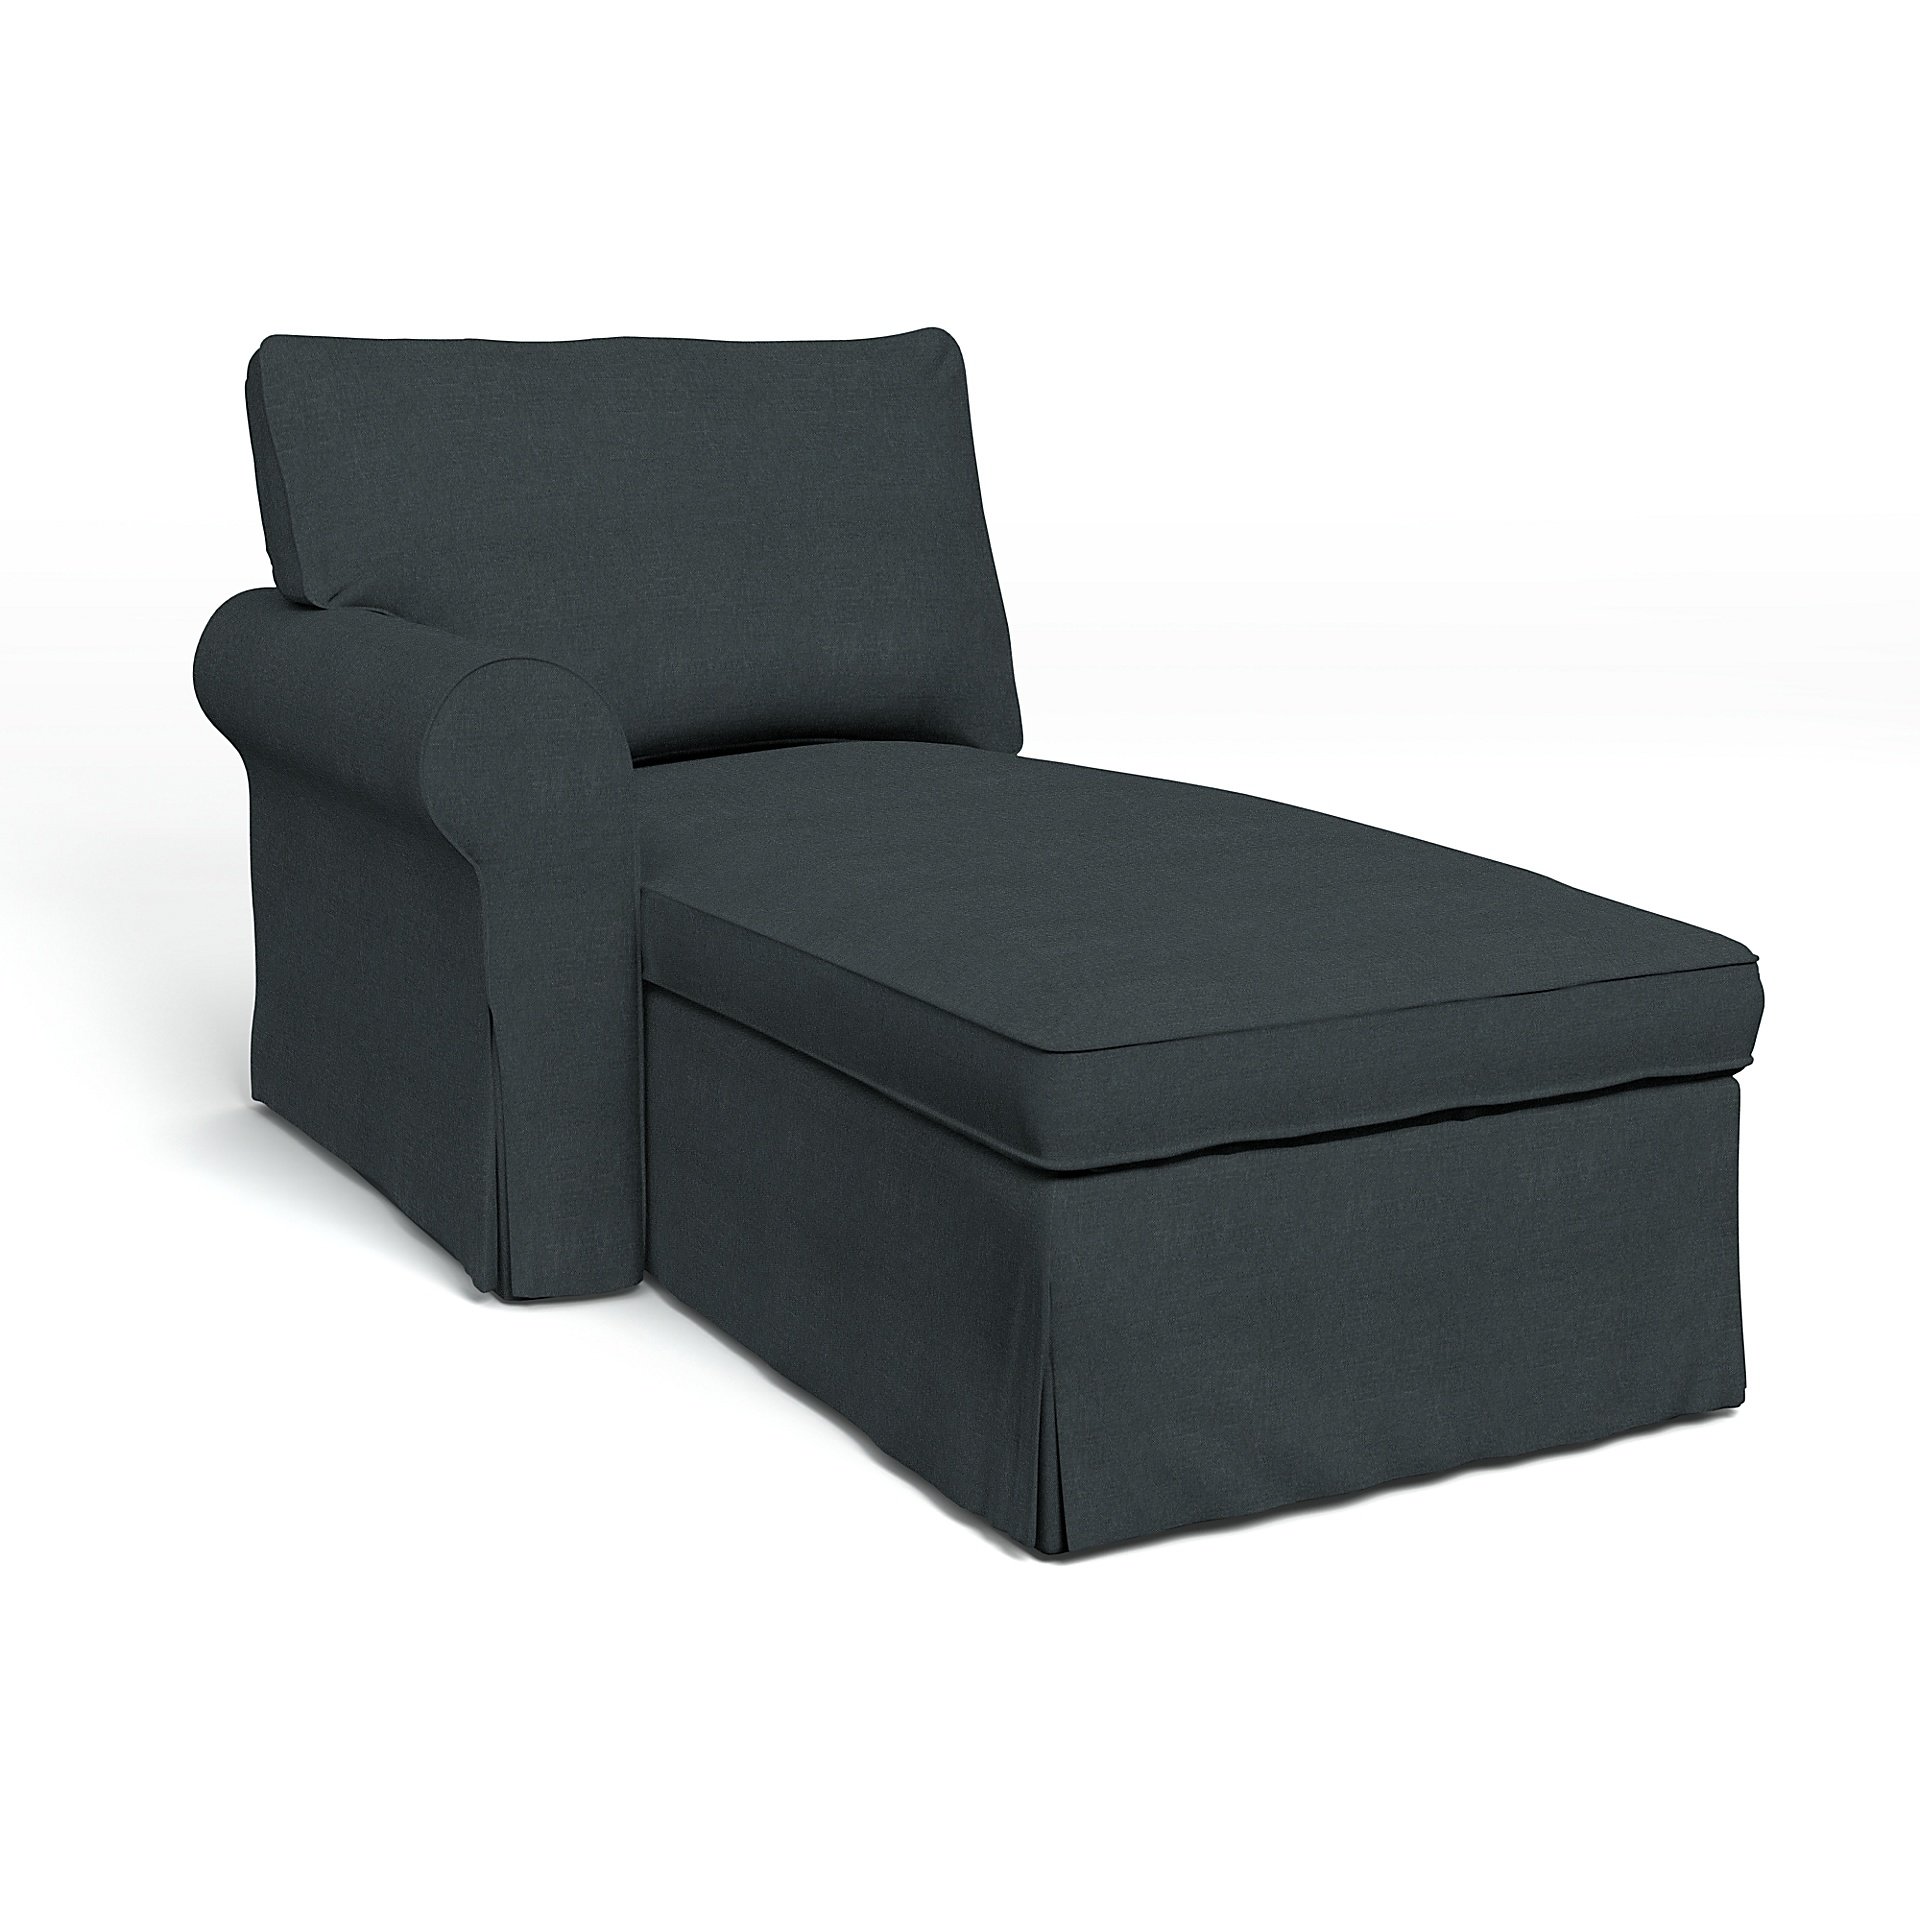 IKEA - Ektorp Chaise with Left Armrest Cover, Graphite Grey, Linen - Bemz